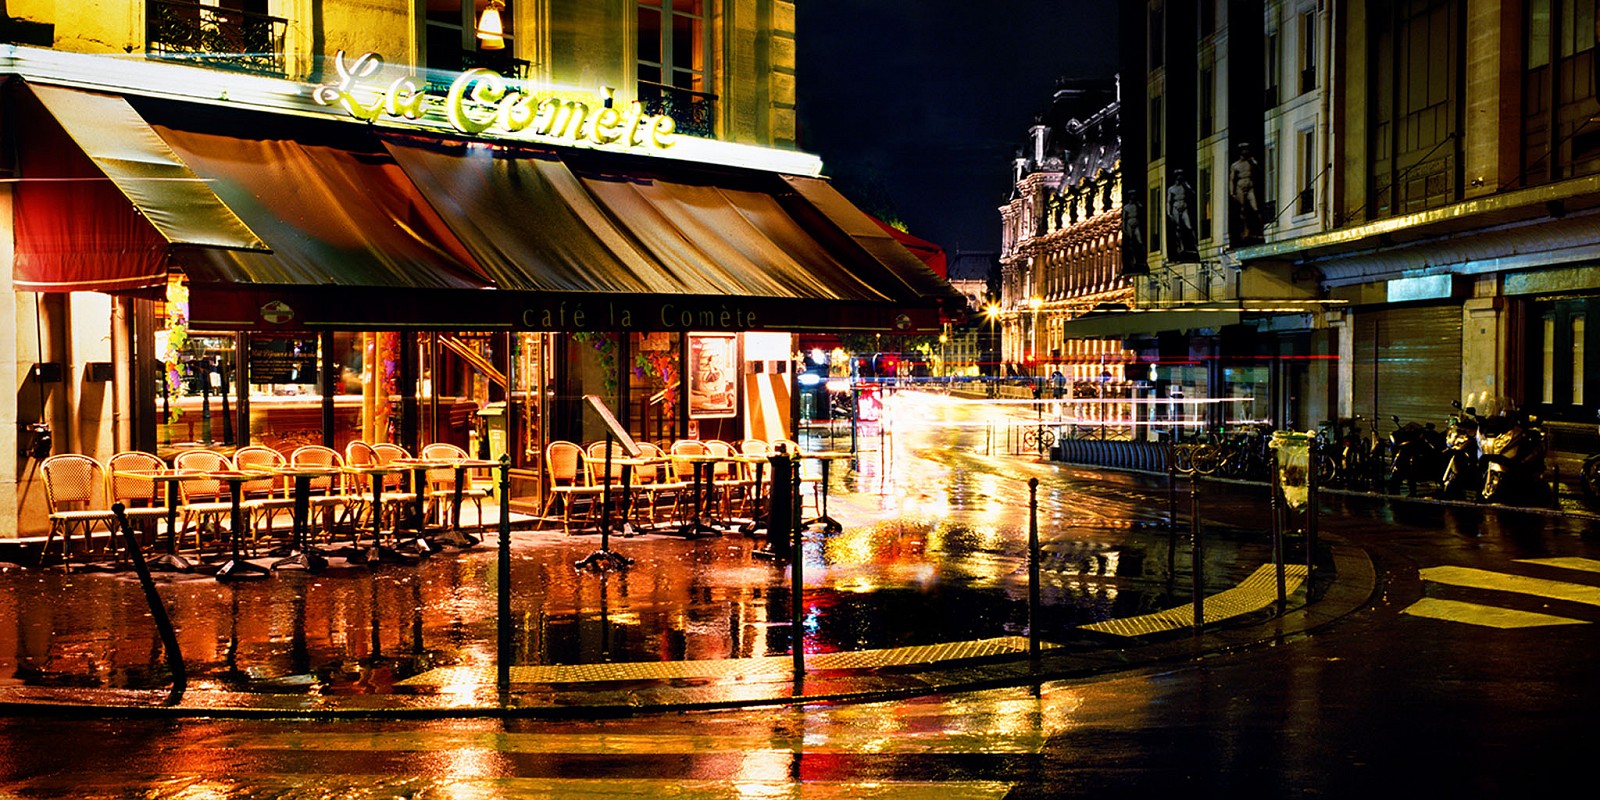 David Drebin, Rain in Paris, 2009
Digital C Print, 20 x 40 inches; 30 x 60 inches; 40 x 80 inches